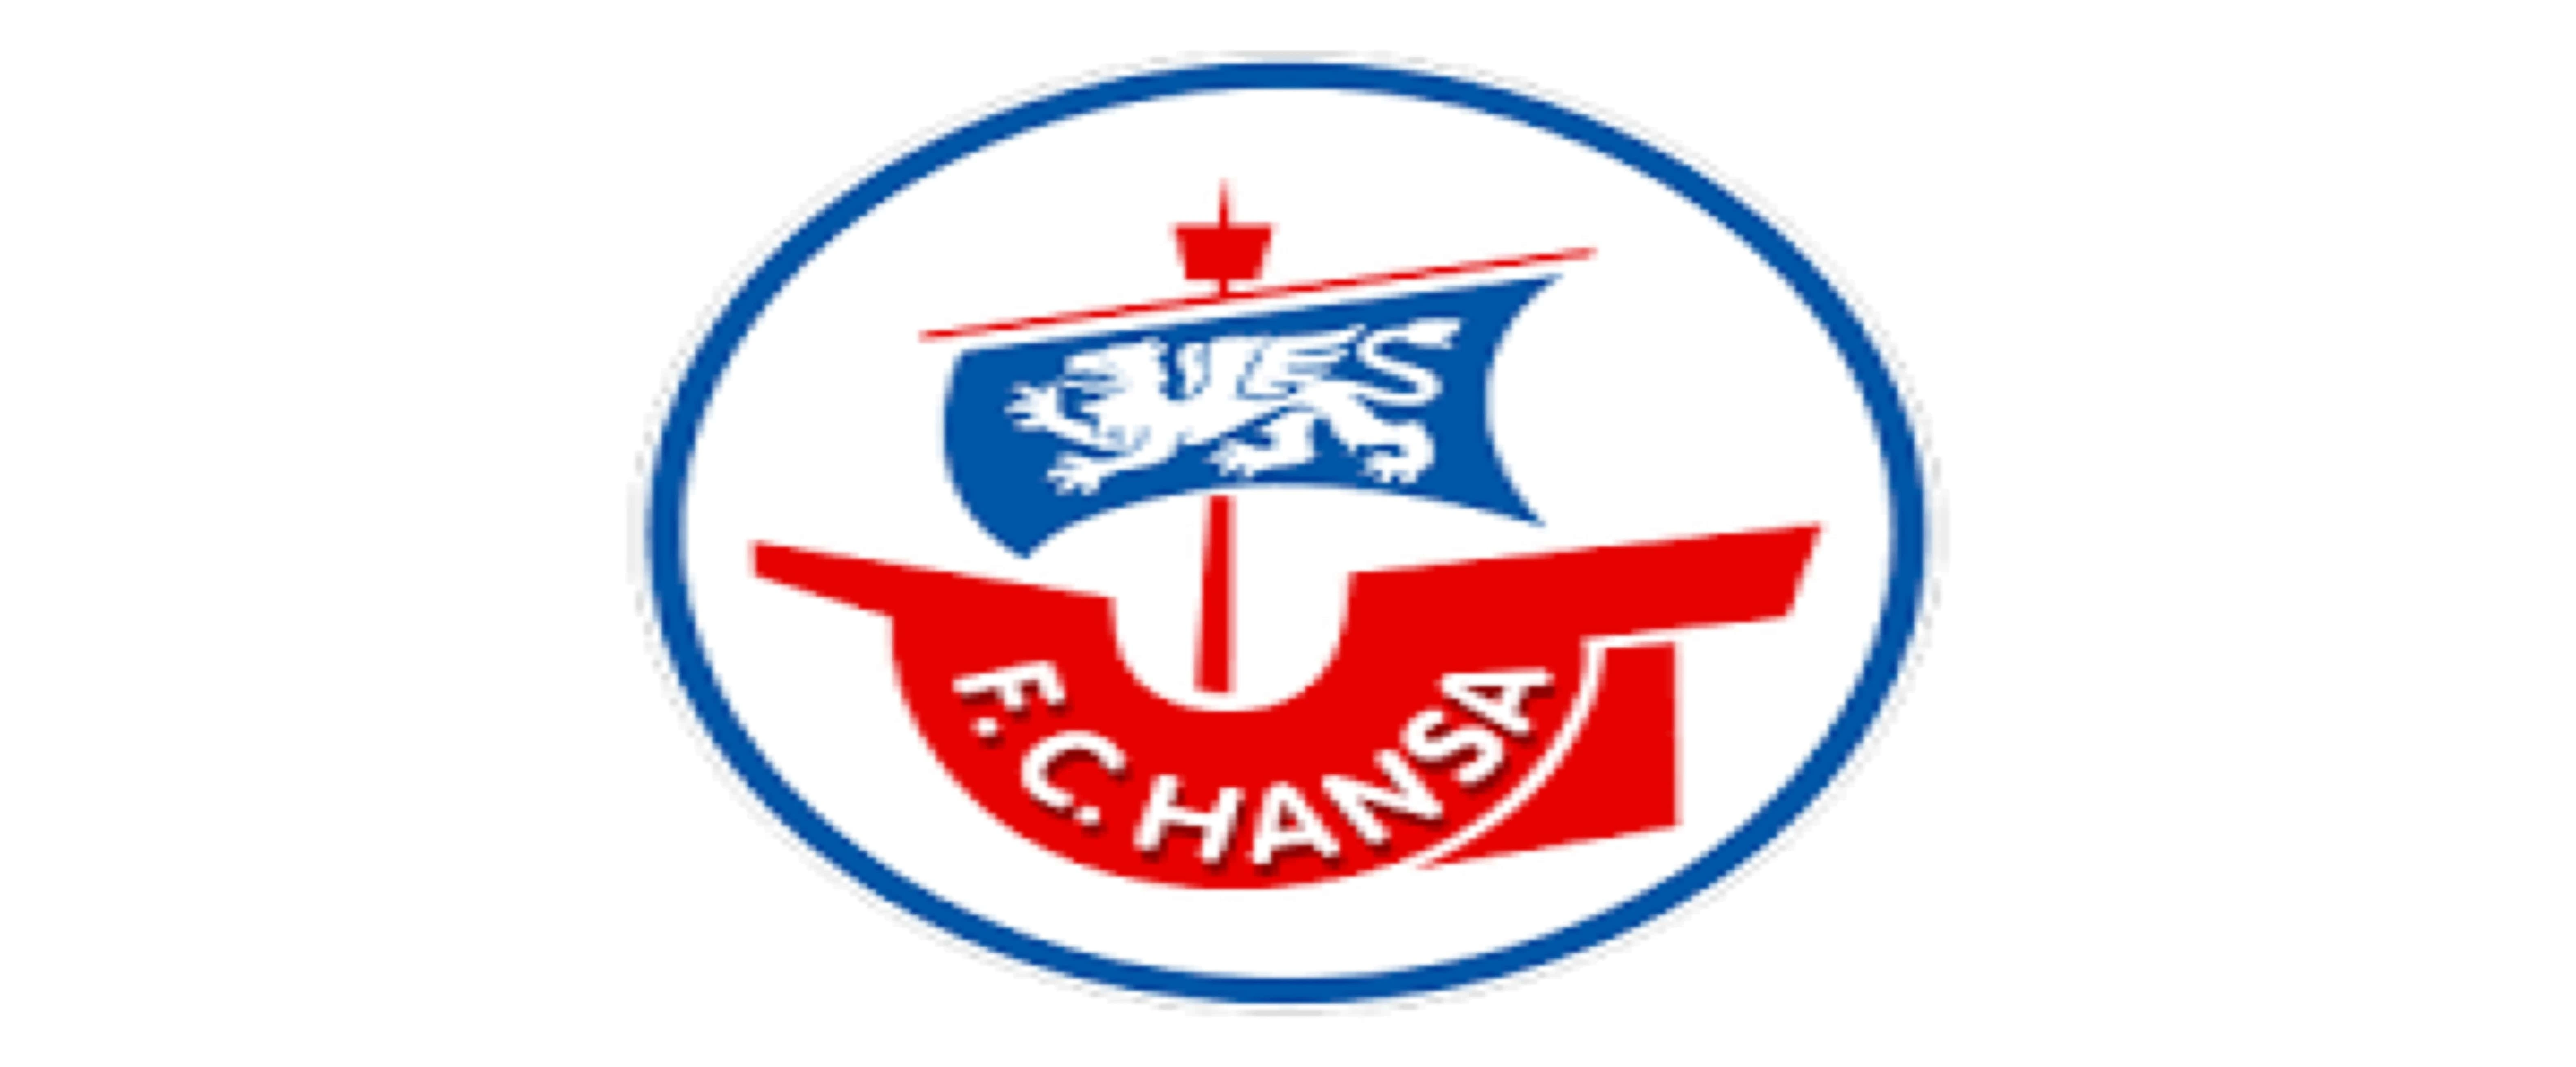 Logo des Fußballclubs FC Hansa Rostock